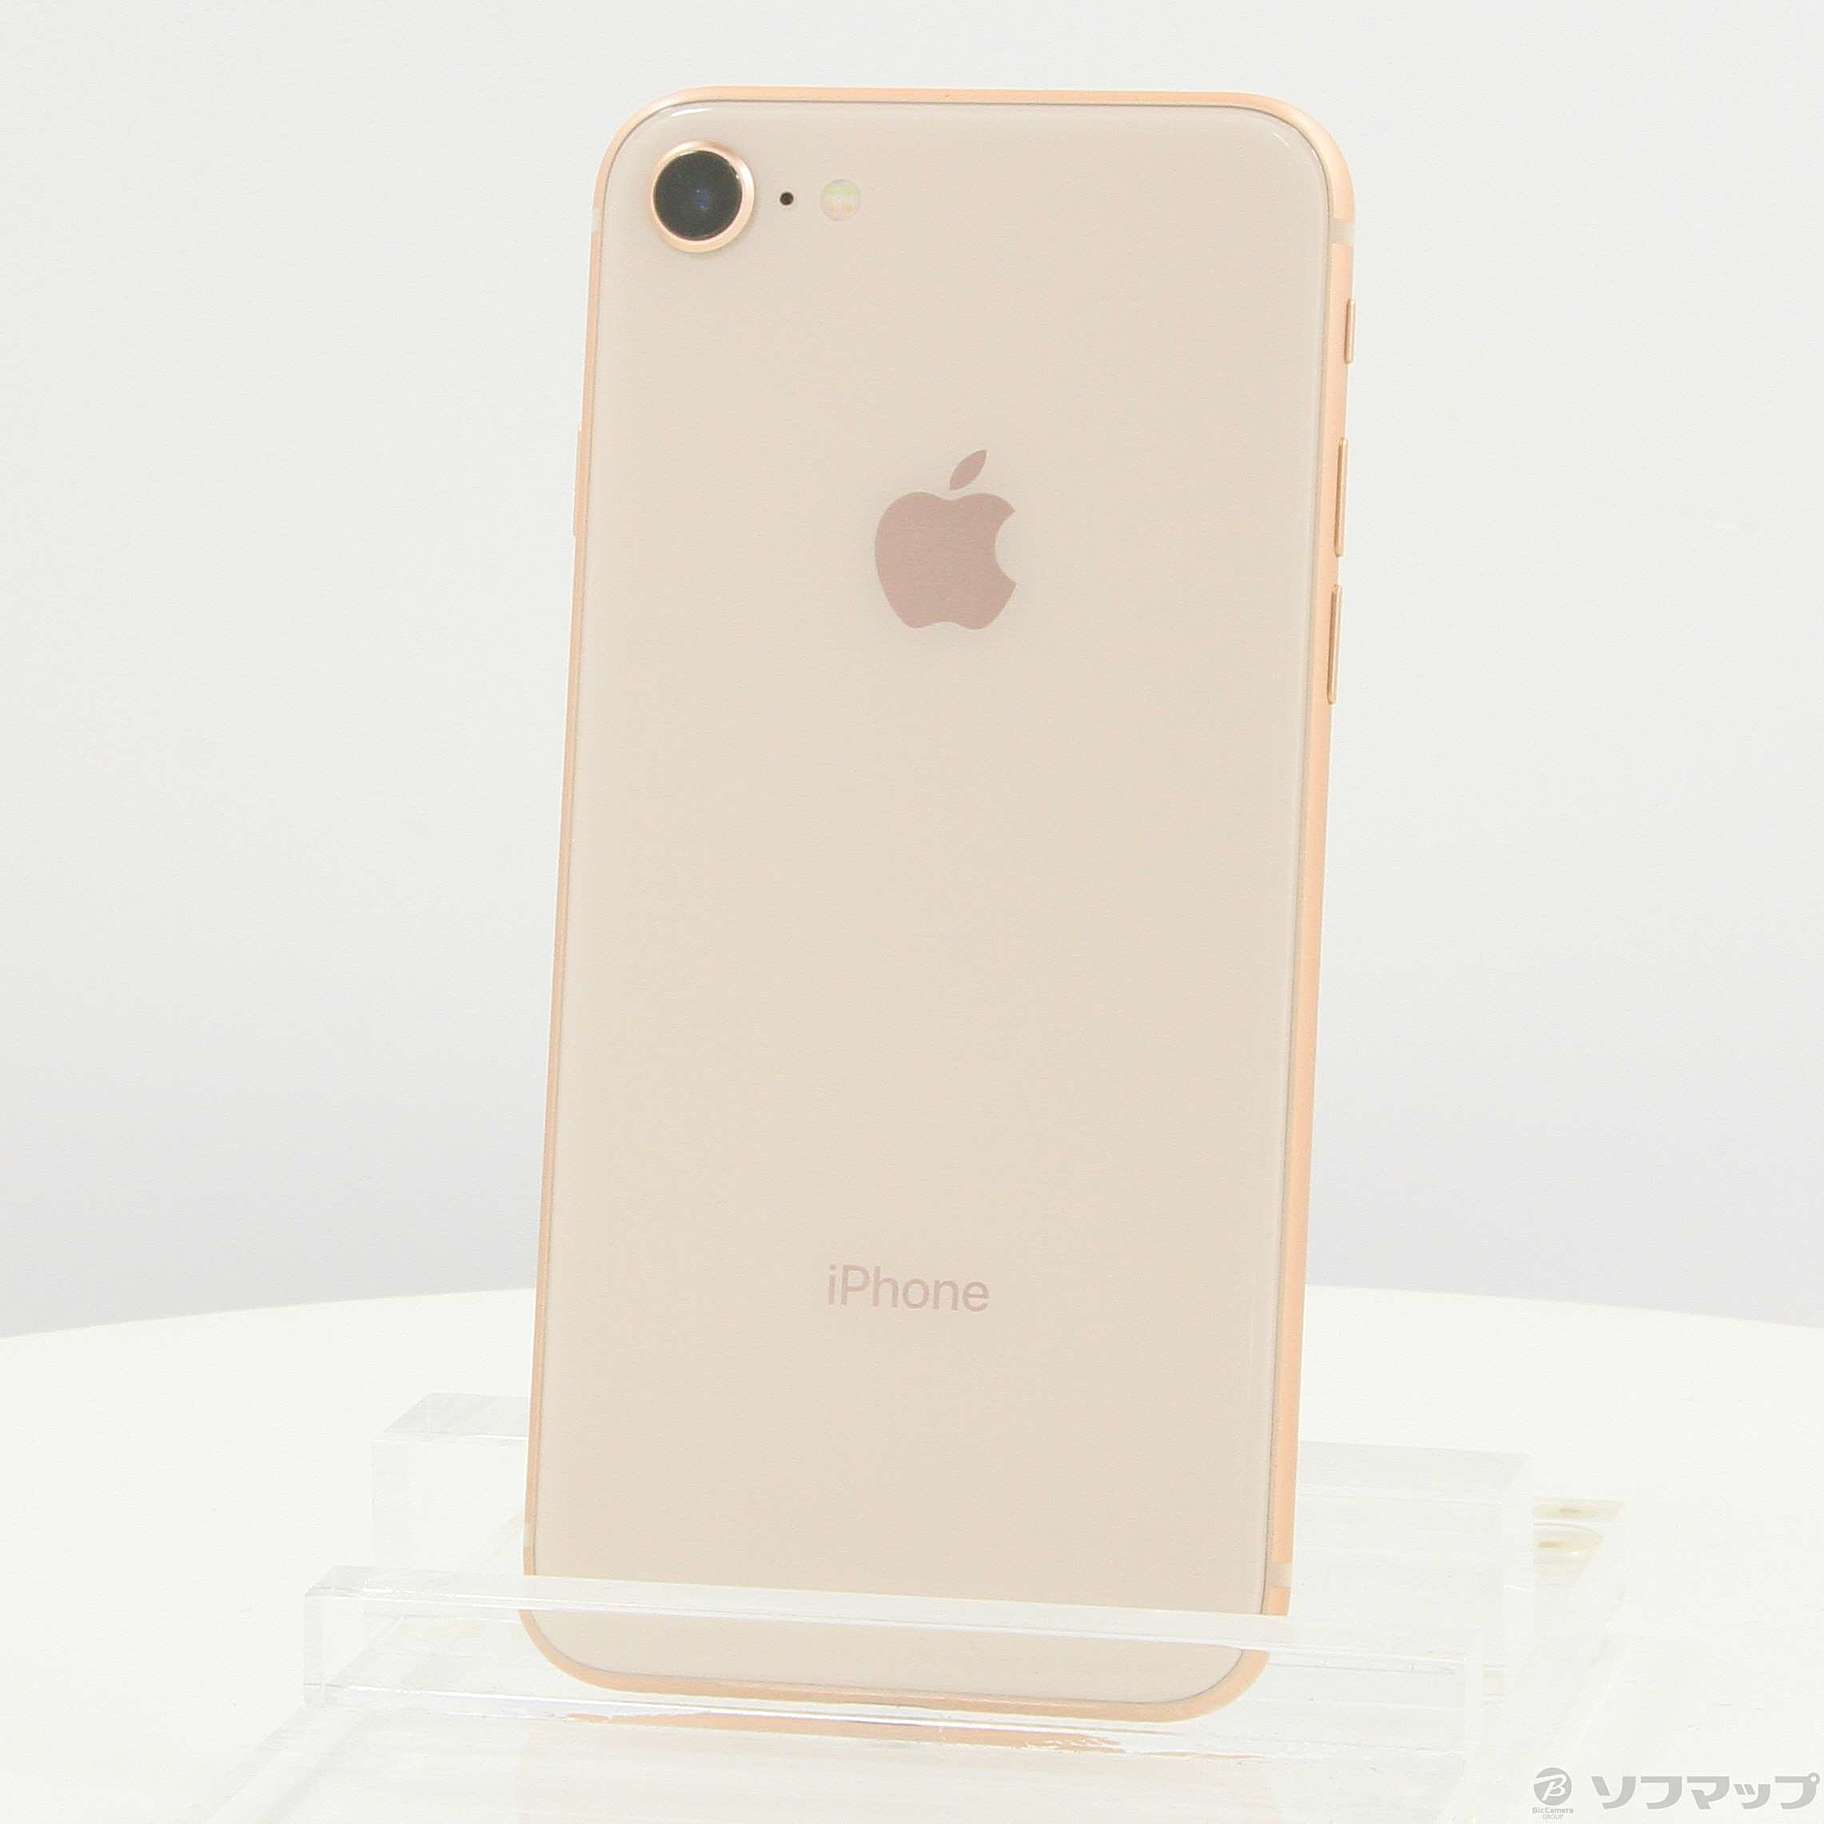 iPhone Gold 64 GB Softbank